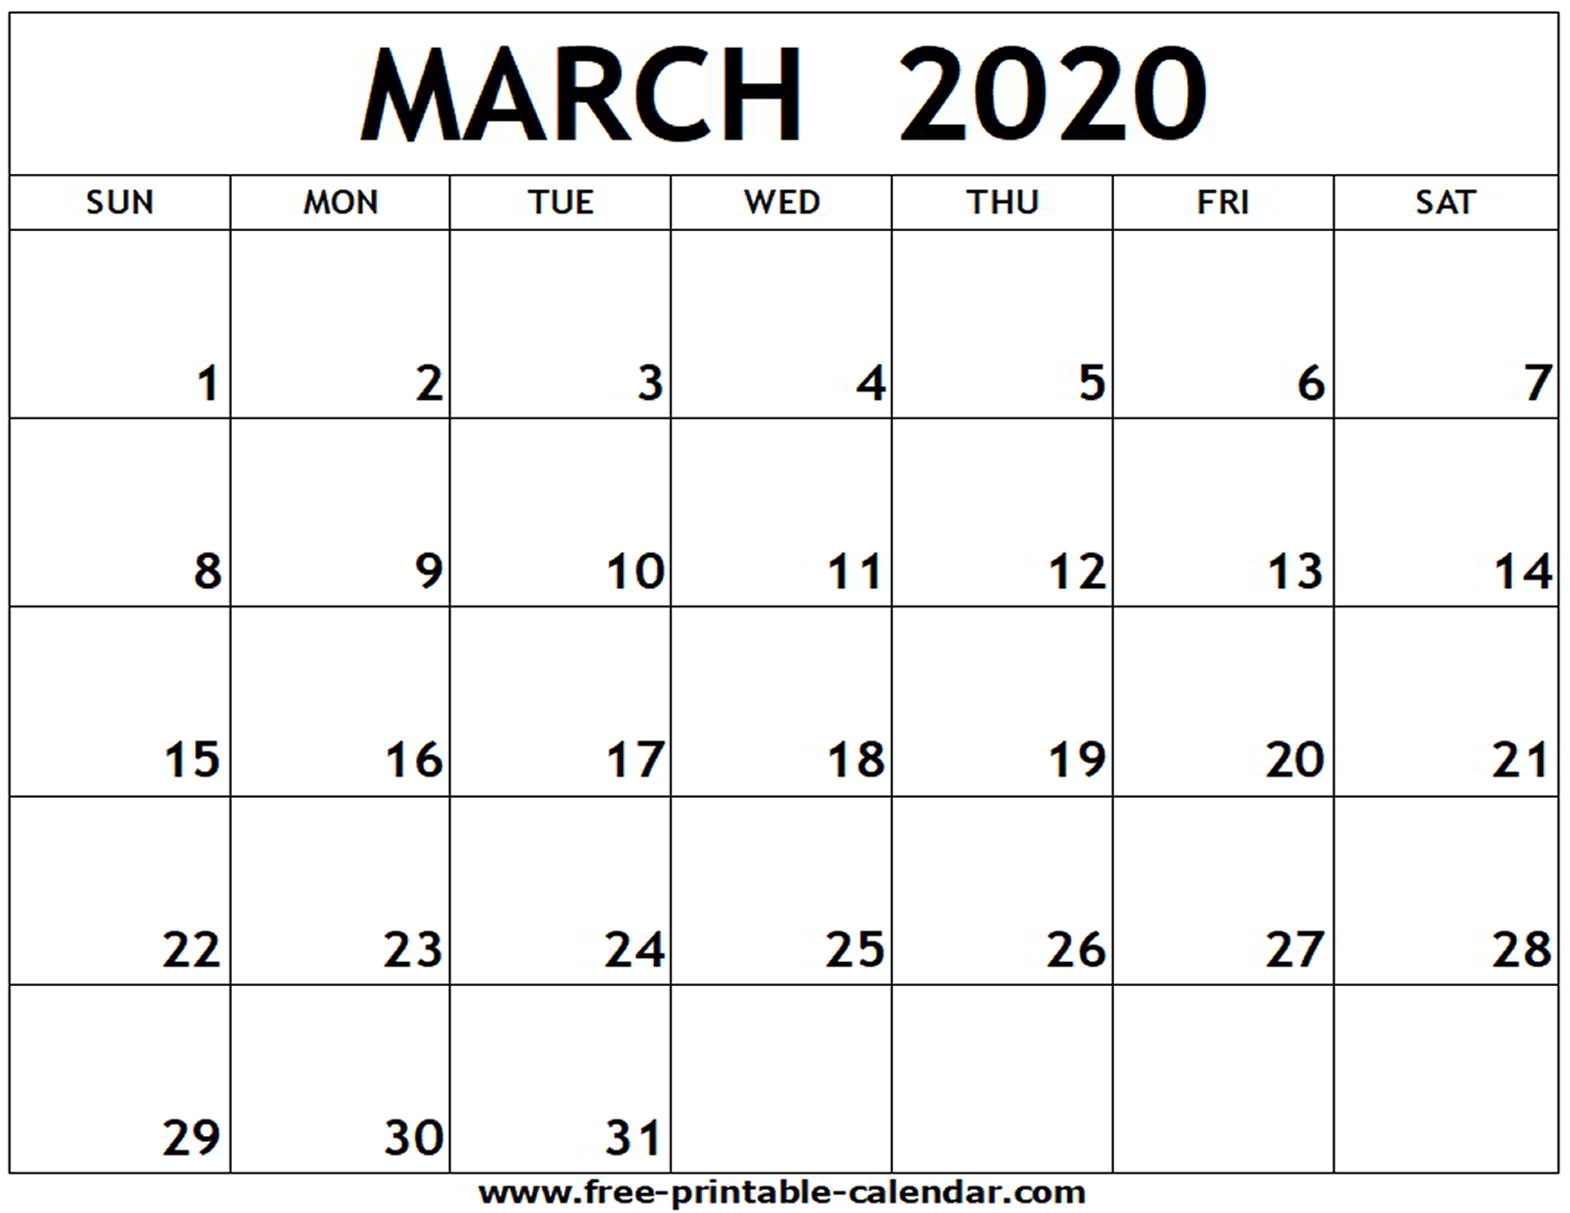 March 2020 Printable Calendar - Free-Printable-Calendar Free Printable 2020 Monthly Calendar